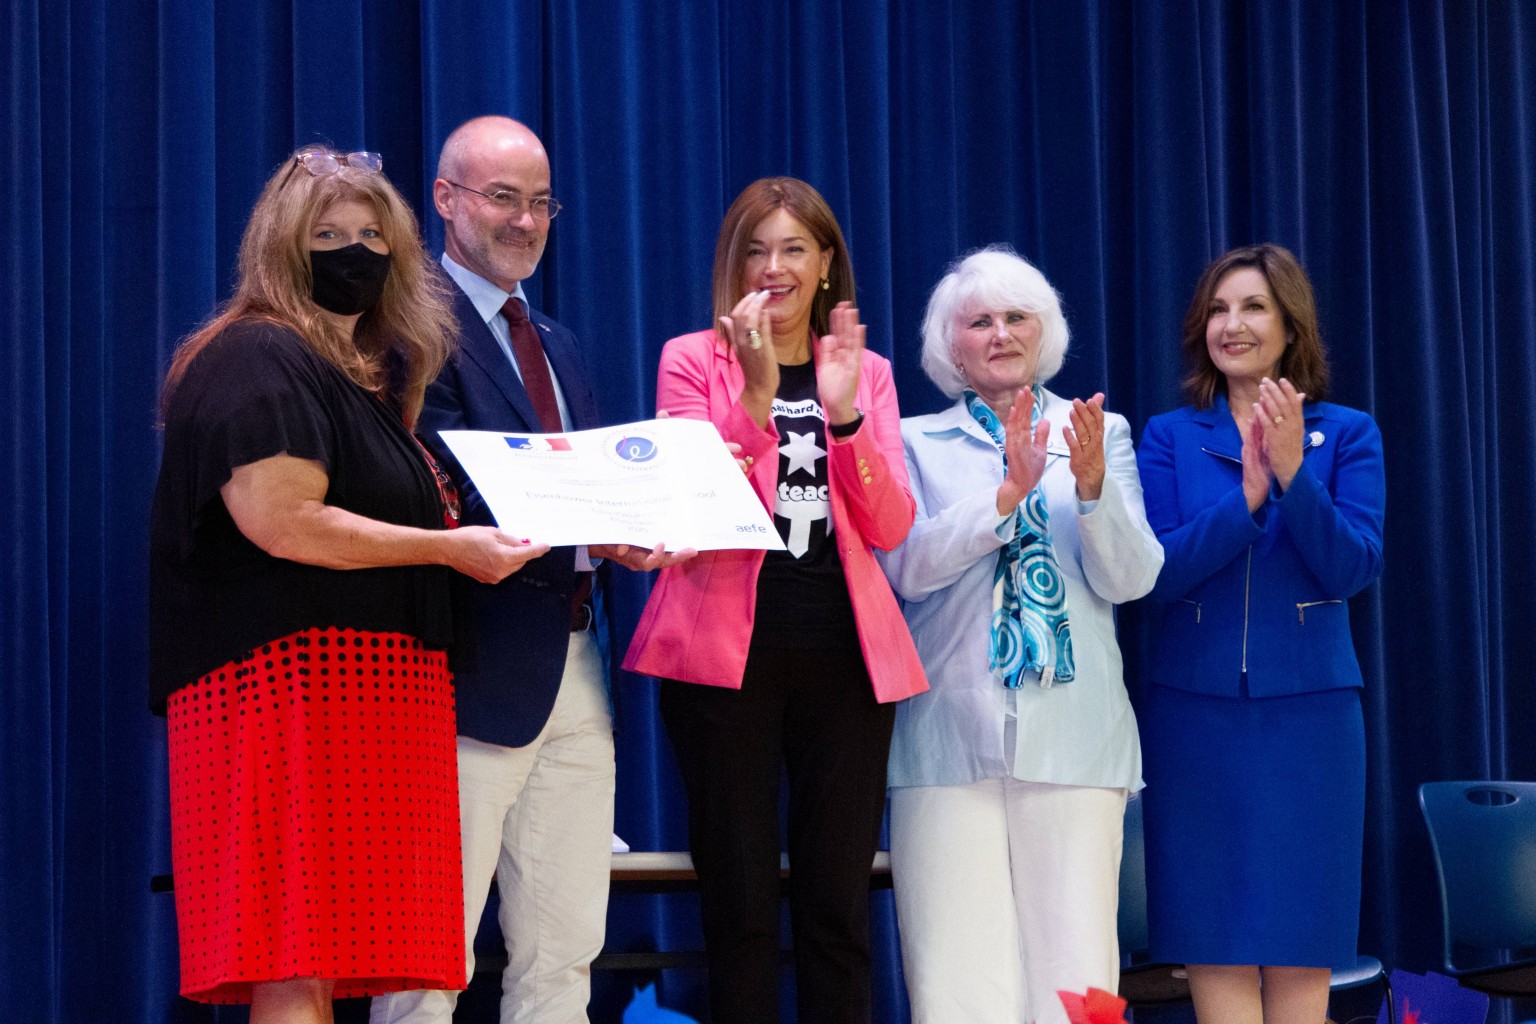 Eisenhower International School recibió el premio "LabelFrancÉducation" 